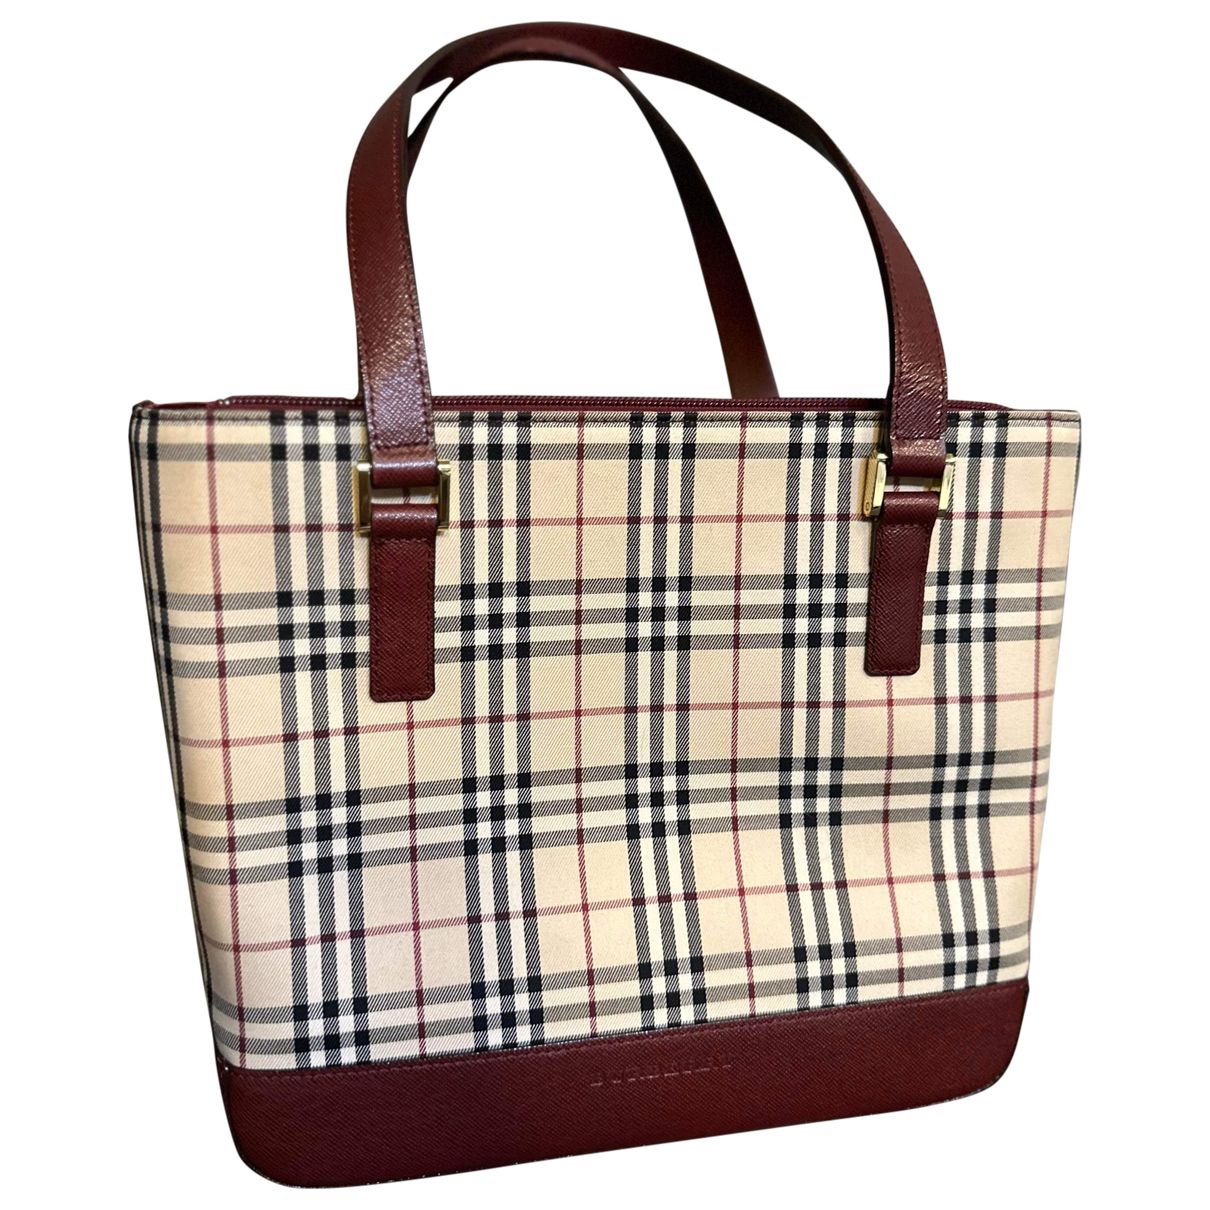 Peggy leather handbag Burberry